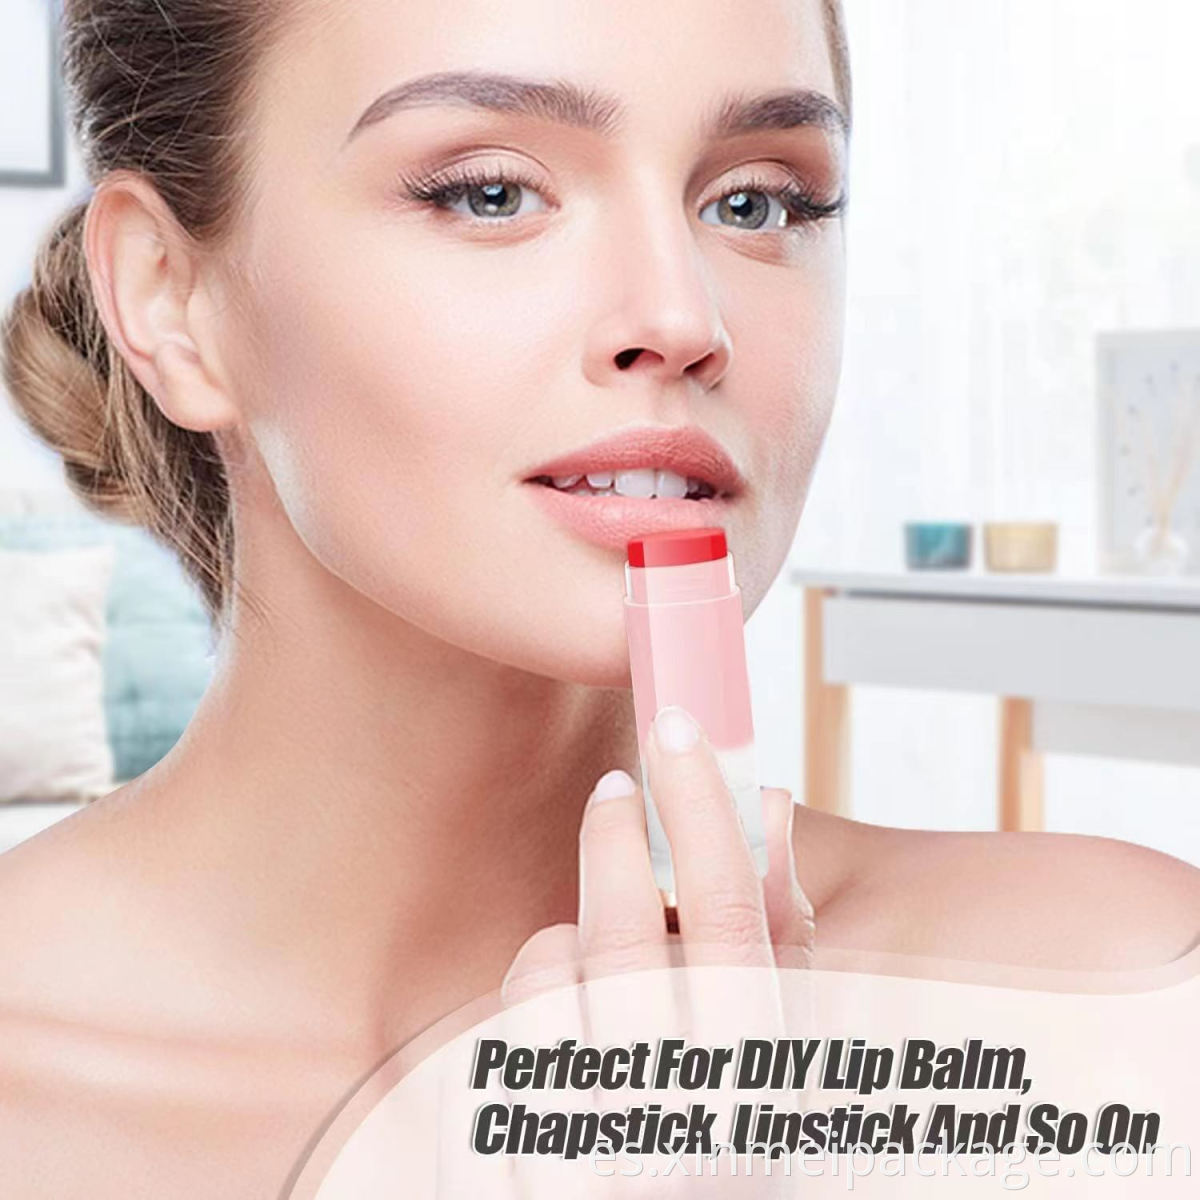 DIY lip balm tubes